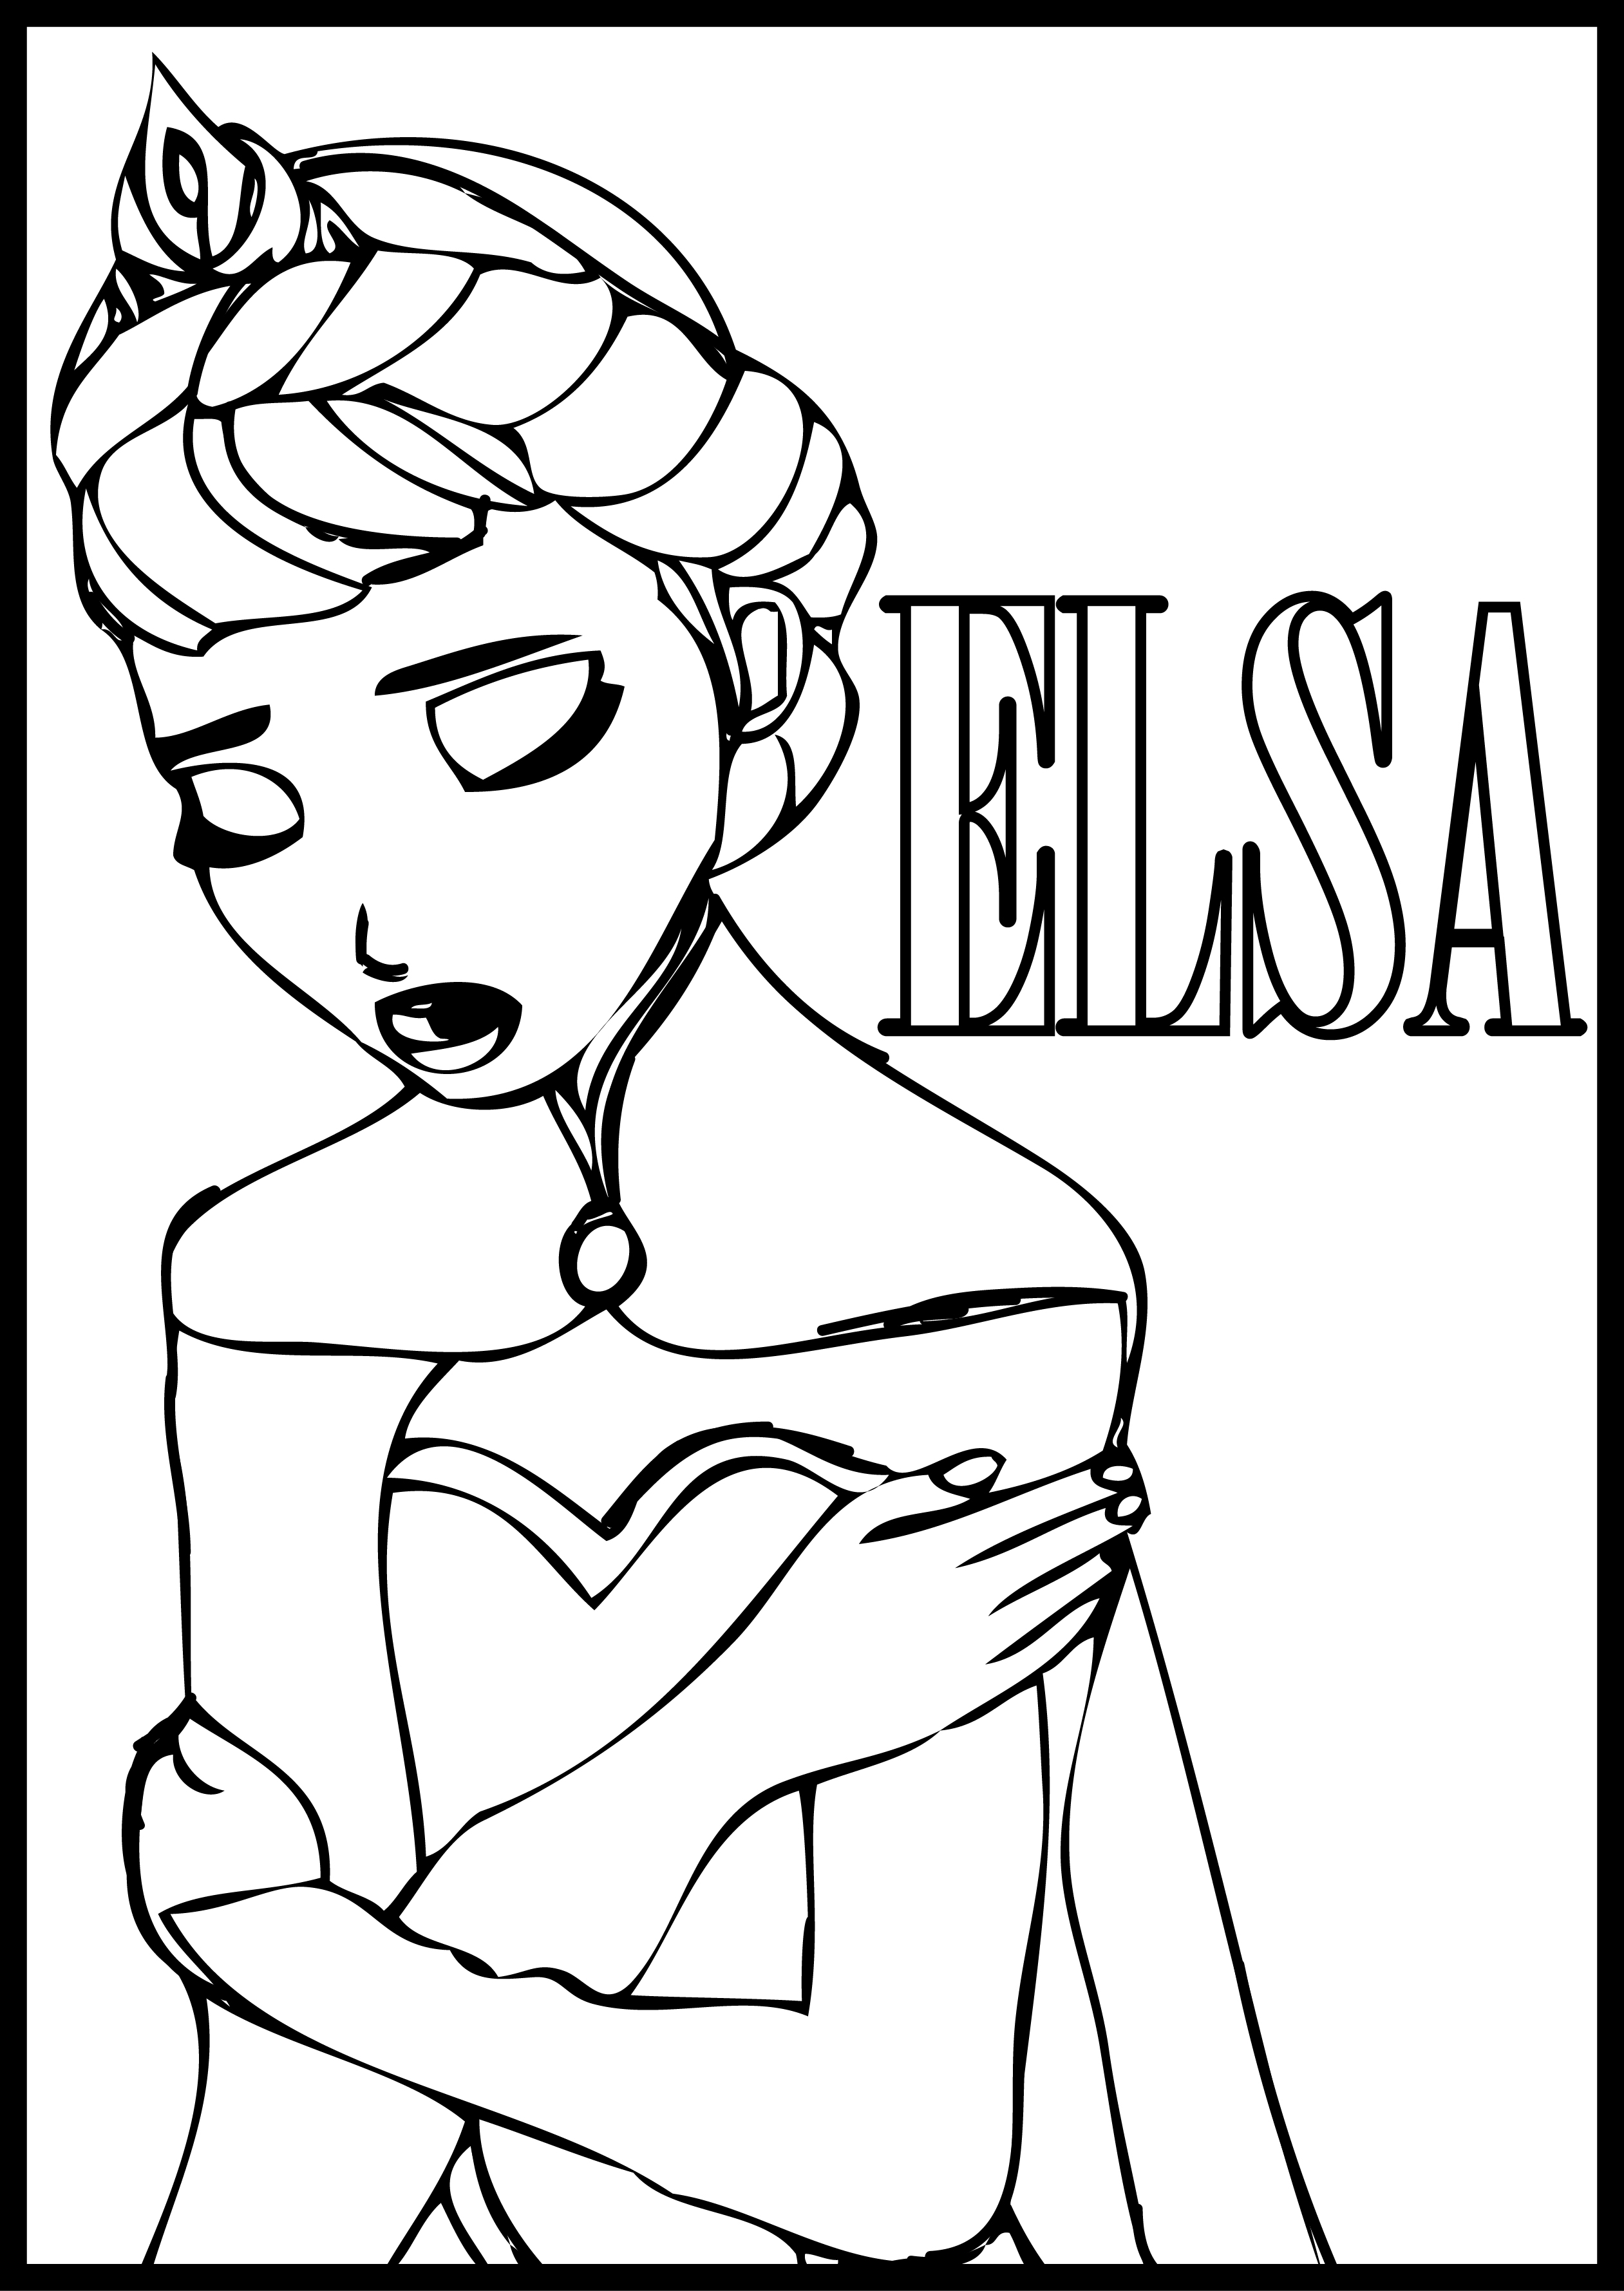 Free Printable Elsa Coloring Pages at GetDrawings   Free ...